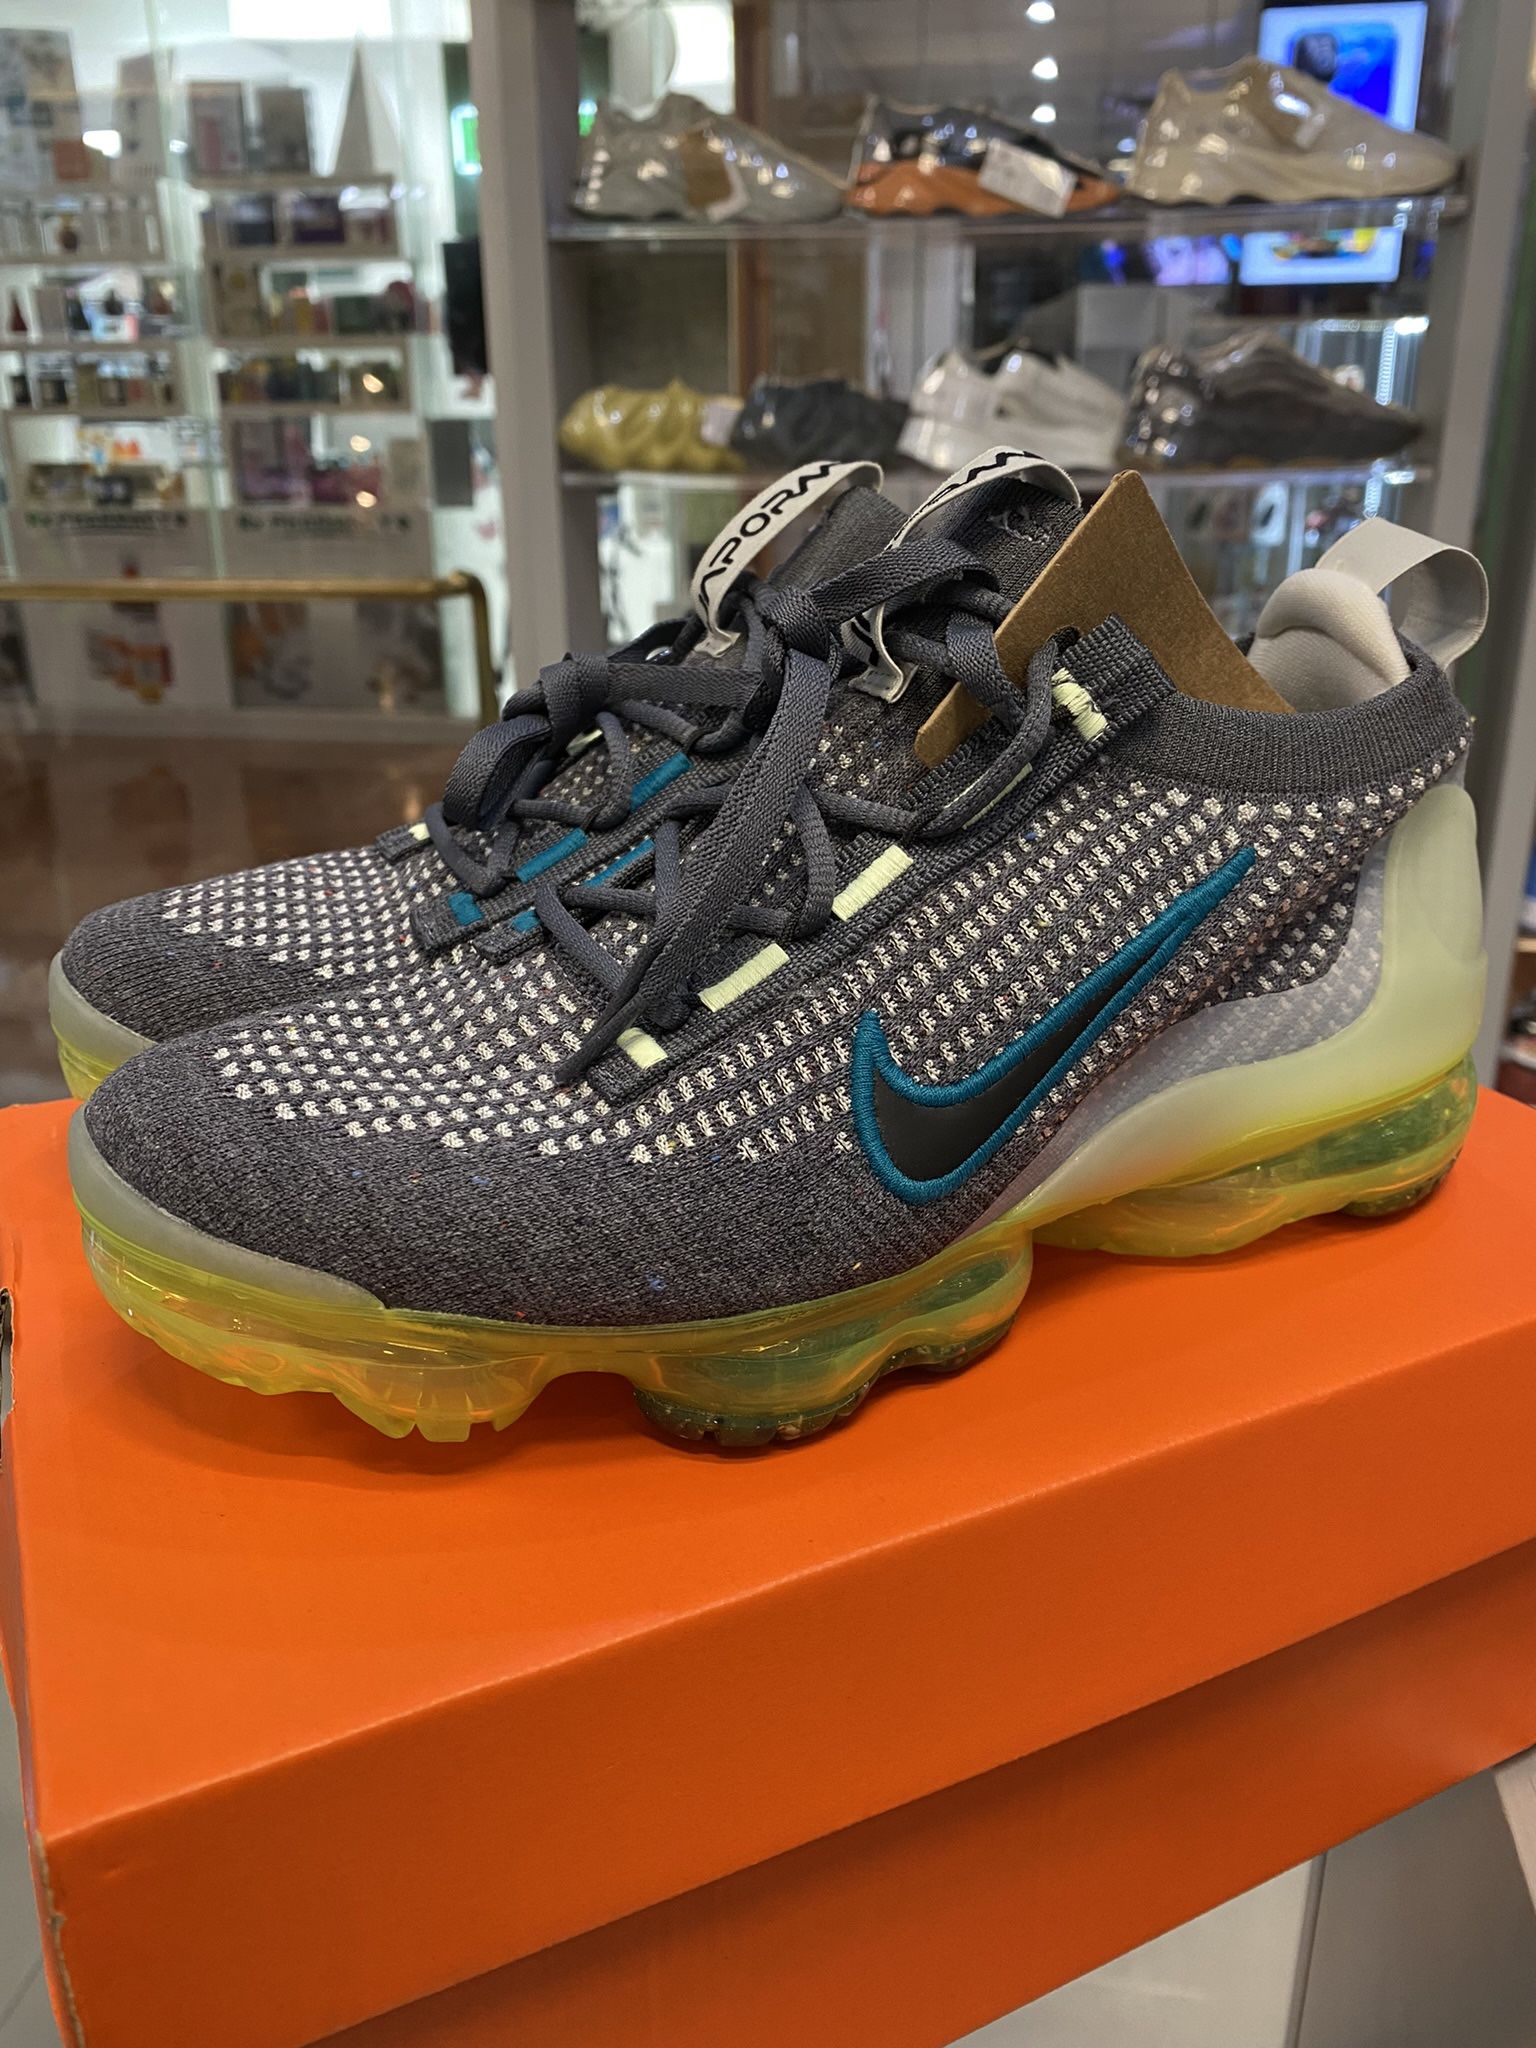 Nike Air Vapormax 2021 FK “Gray/Volt” Size 4Y (Women’s 5.5)